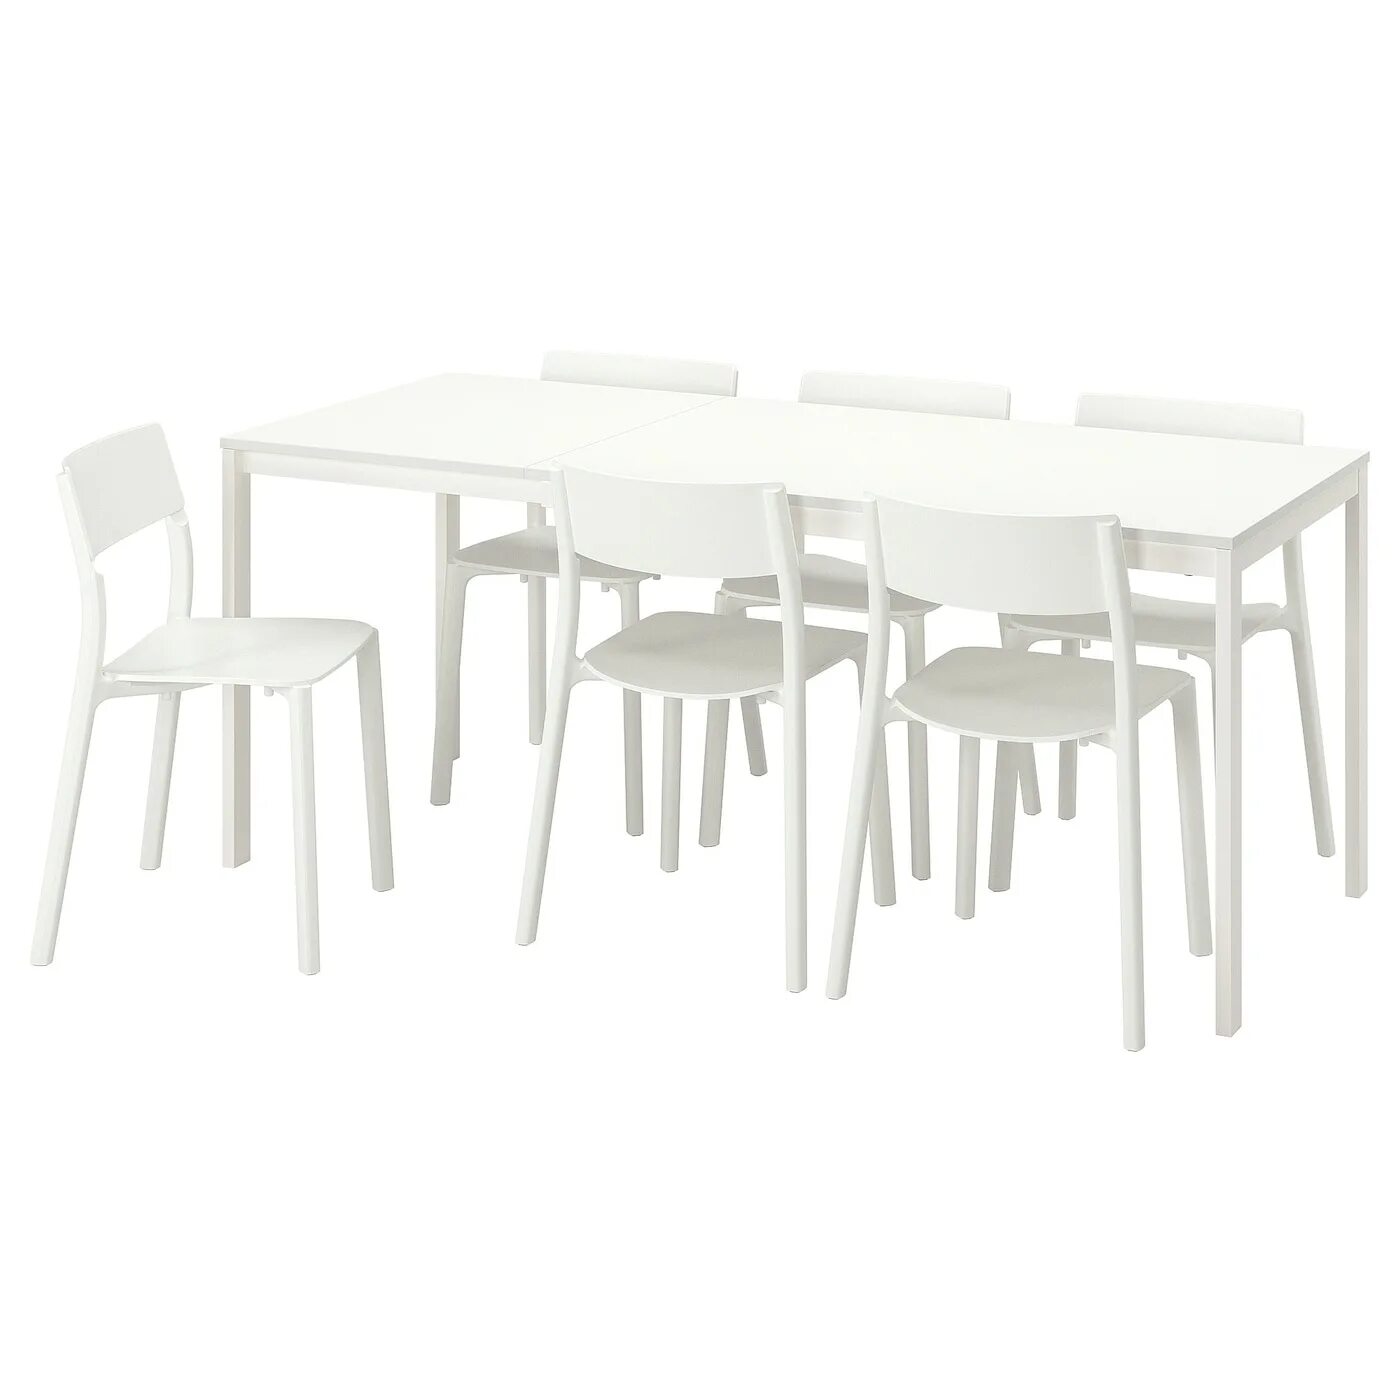 Икеа стол кухонный белый. Melltorp МЕЛЬТОРП стол белый 125x75 см. Стол икеа МЕЛЬТОРП белый. Икеа МЕЛЬТОРП 75 на 125 стол. Стол Melltorp ikea 75 на 75.